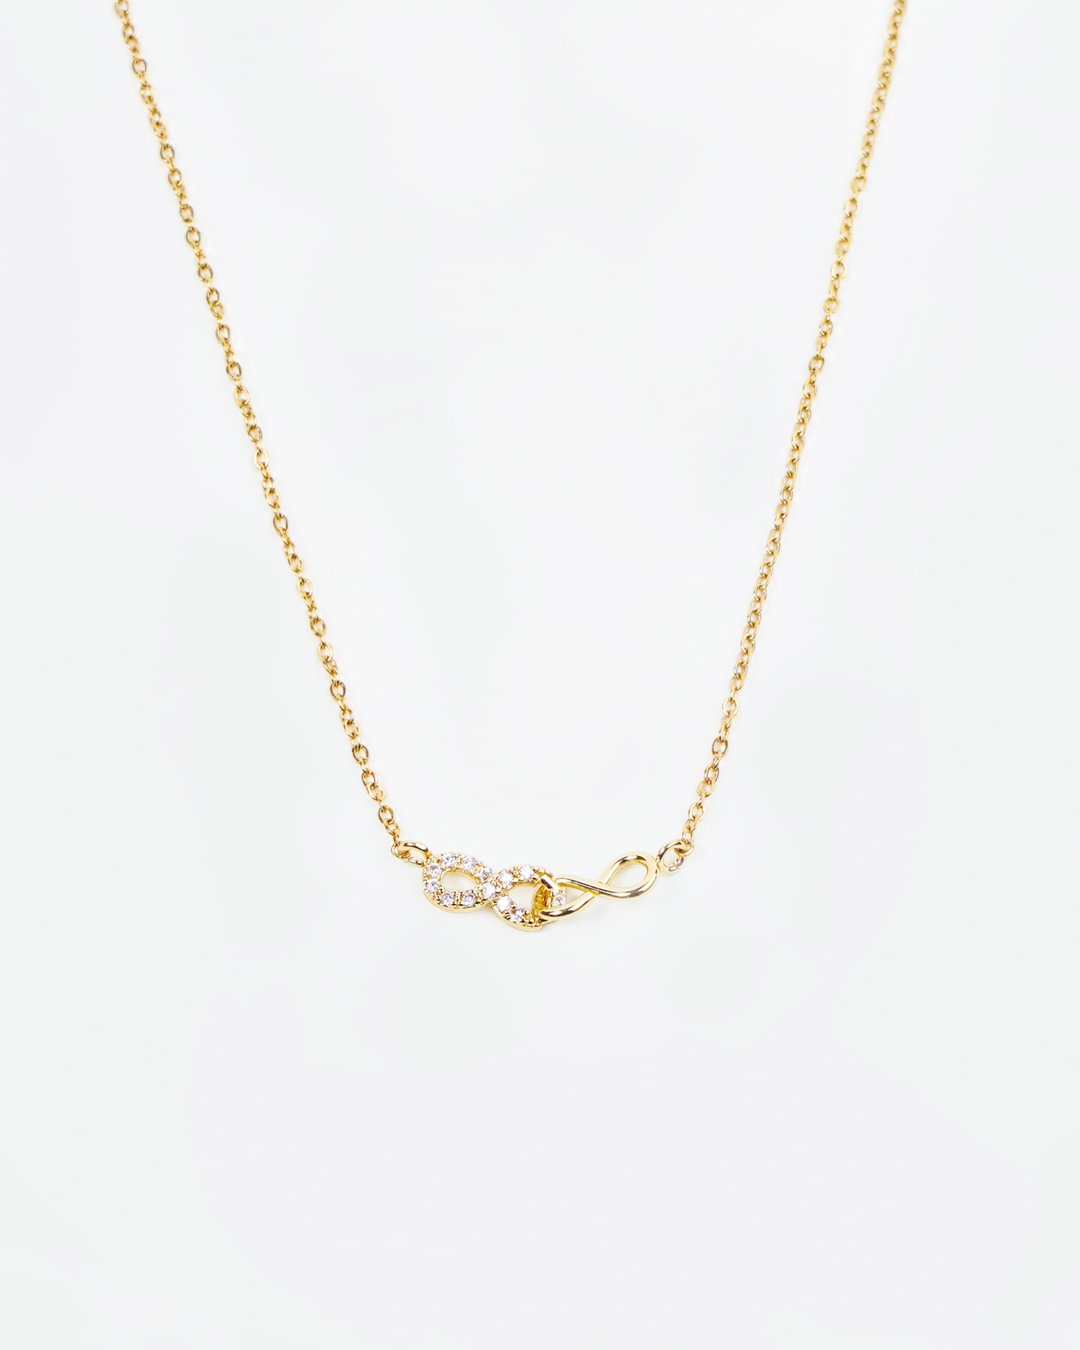 FashionV-FashionV Golden Textured Necklace